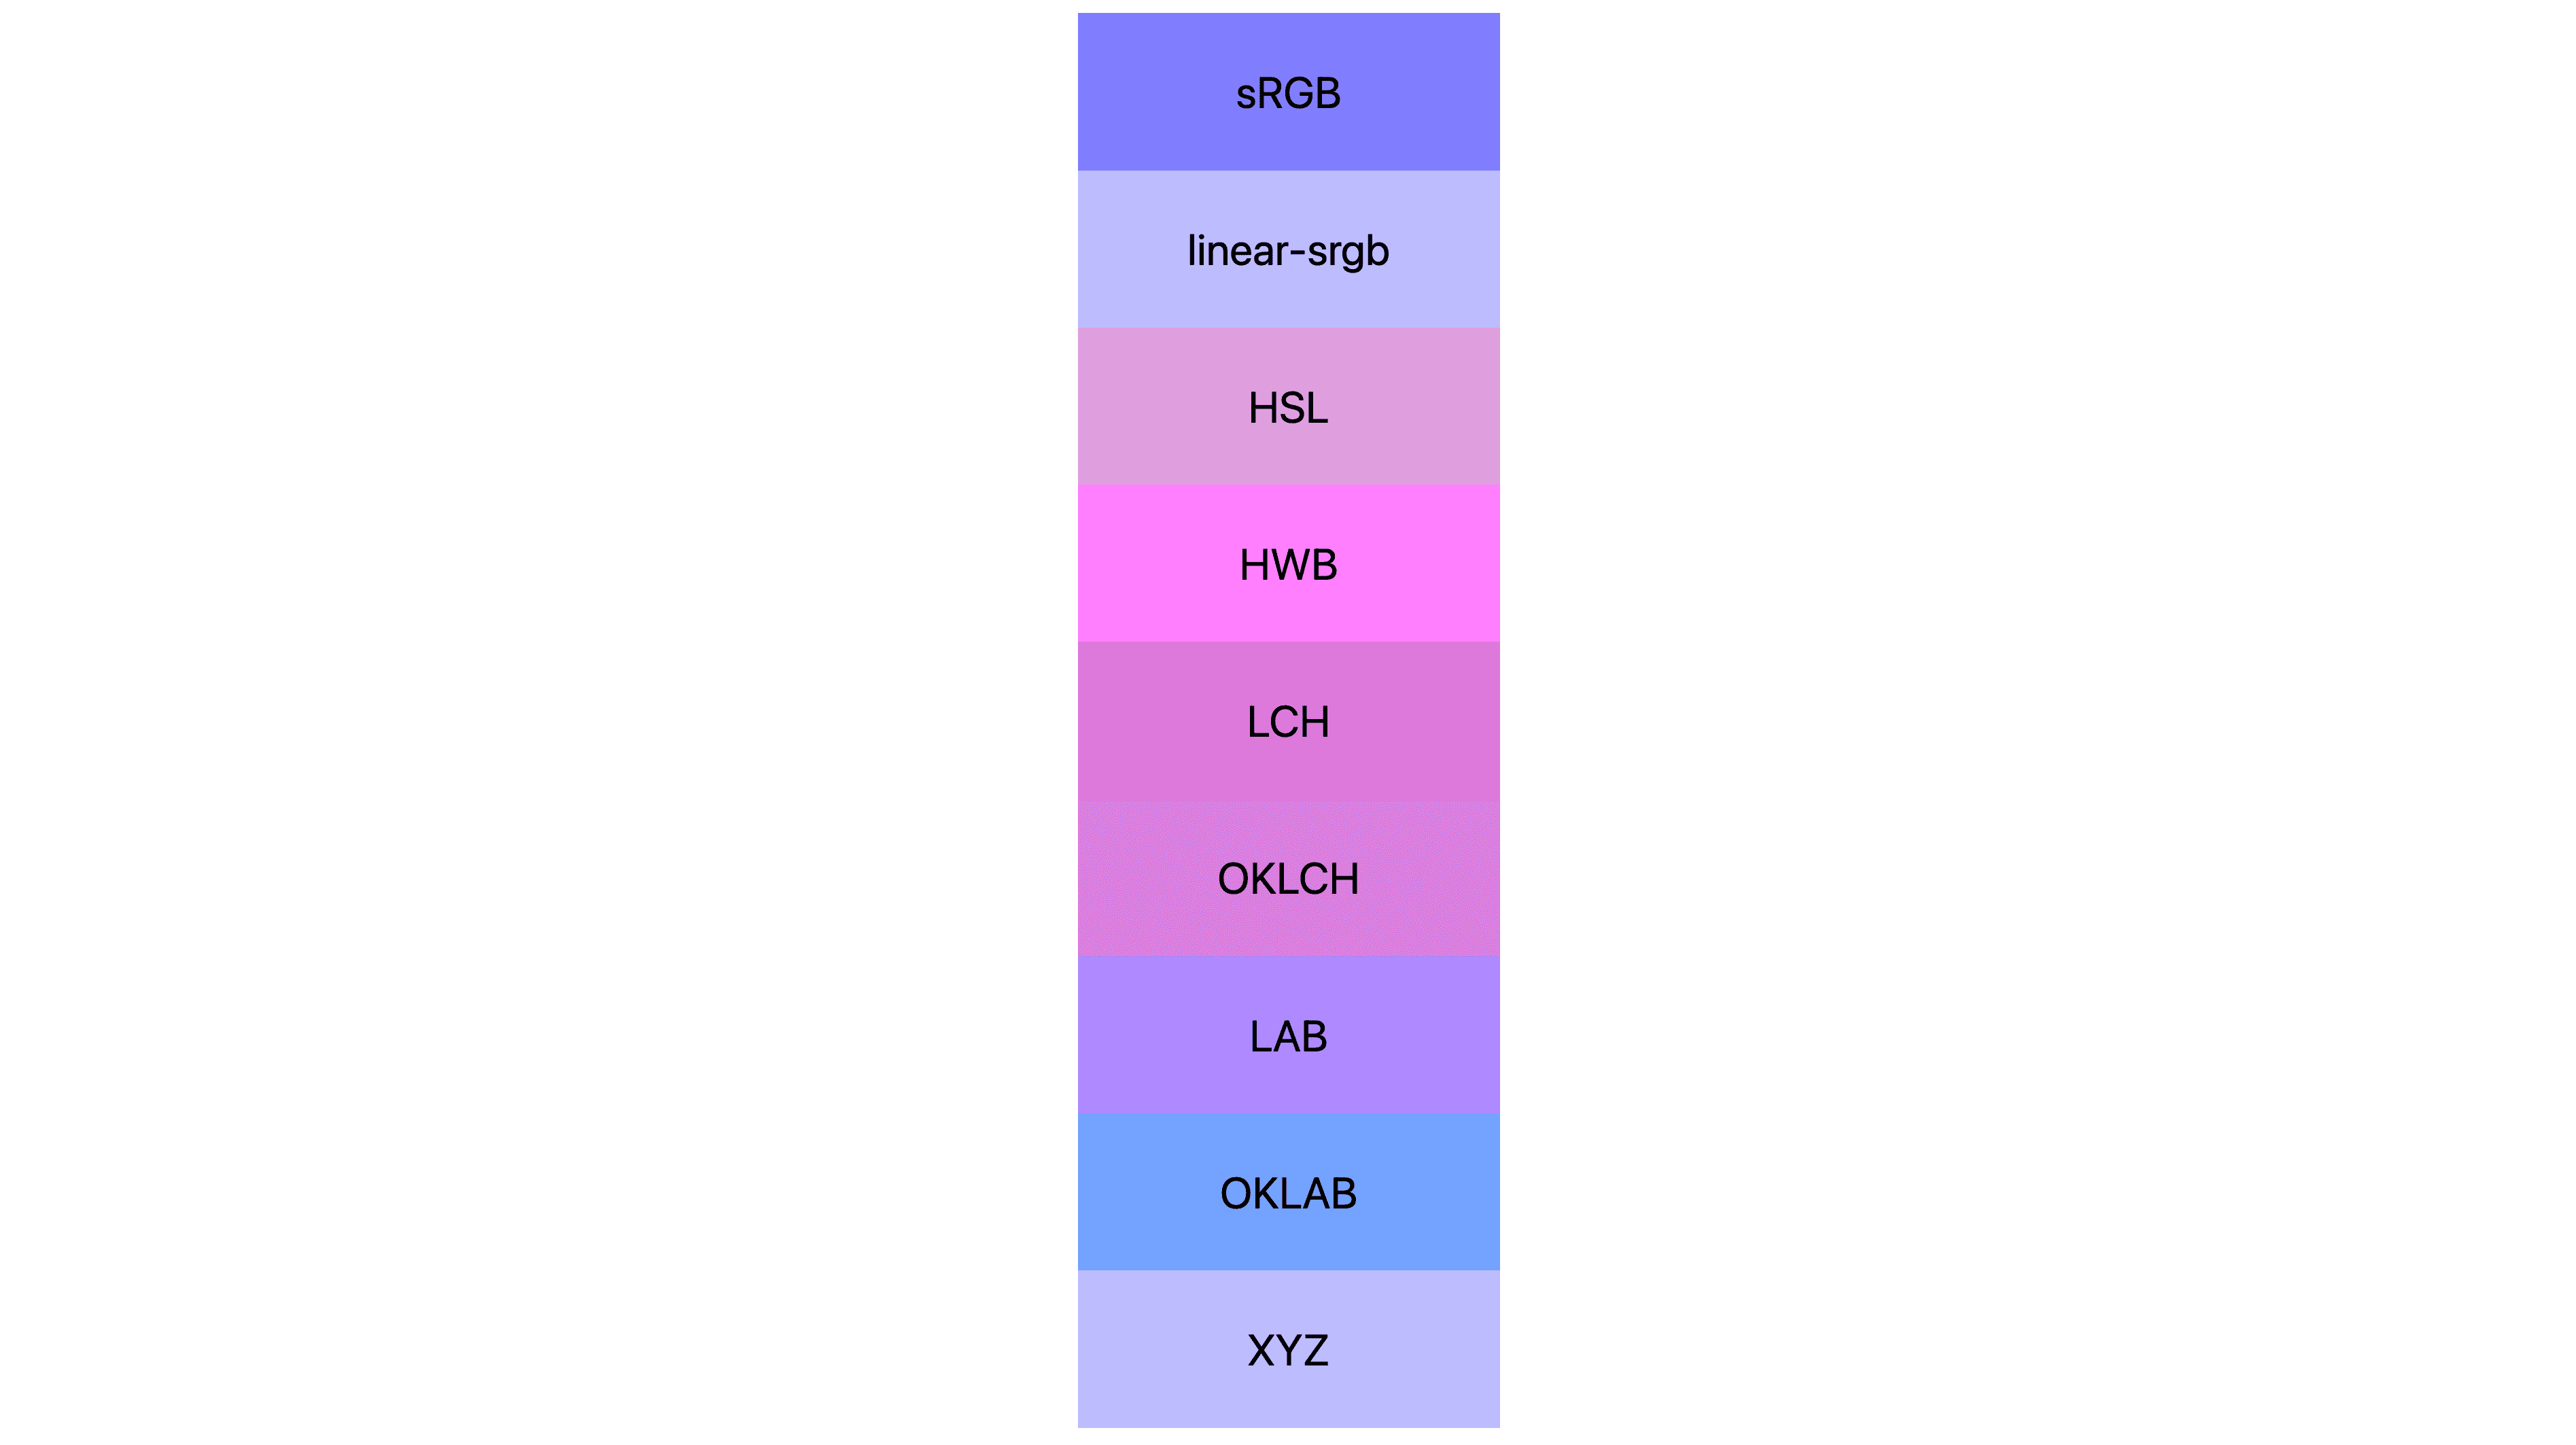 Her biri farklı sonuçlara sahip olarak gösterilen 7 renk alanının (srgb, linear-srgb, lch, oklch, lab, oklab, xyz). Çoğu pembe veya mor, bazıları ise hâlâ mavidir.